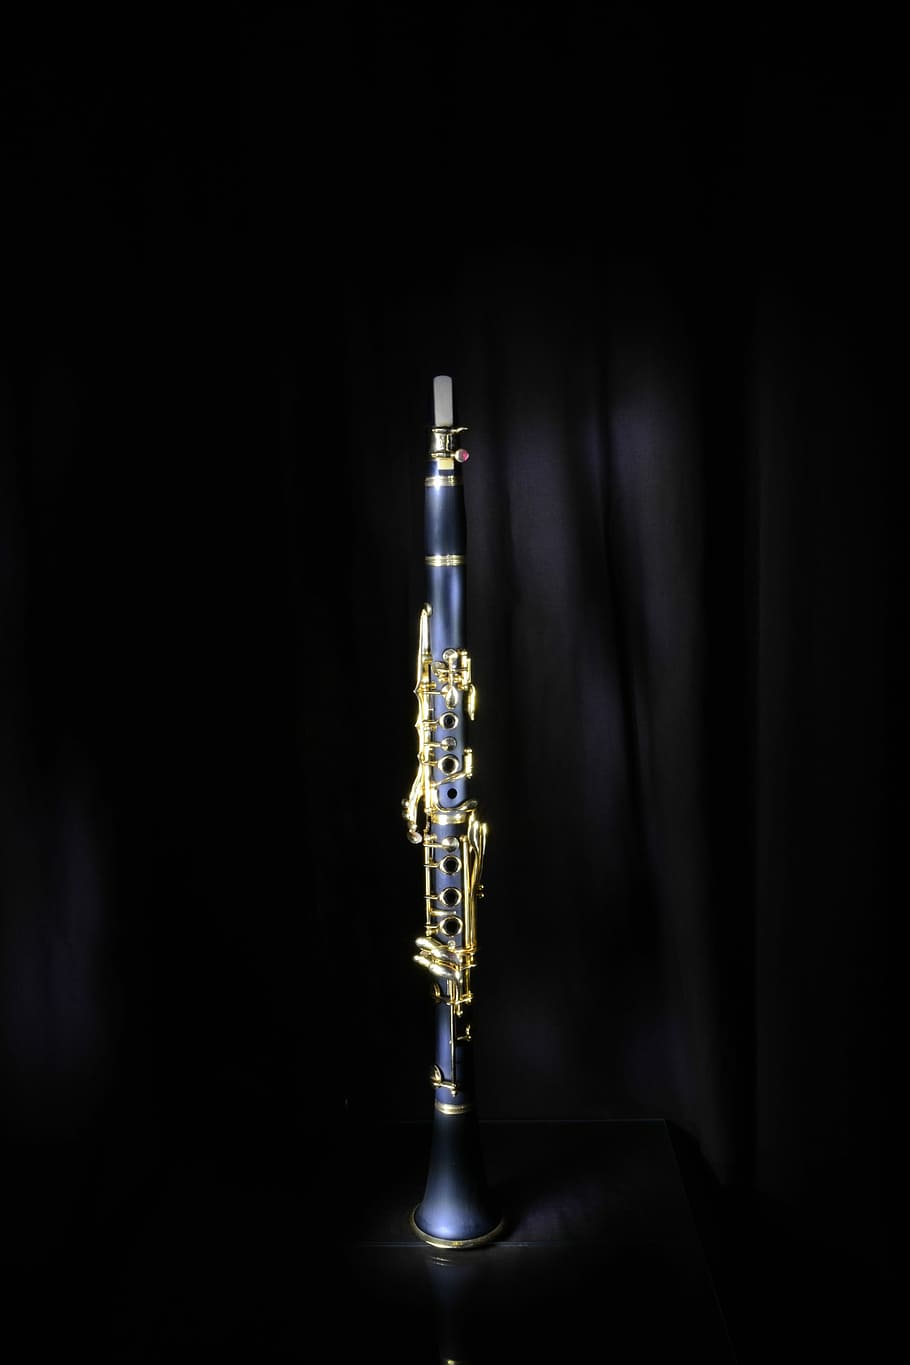 Clarinet, Jazz, Musical Instrument, music, black background, single object, close-up, day, studio shot, indoors